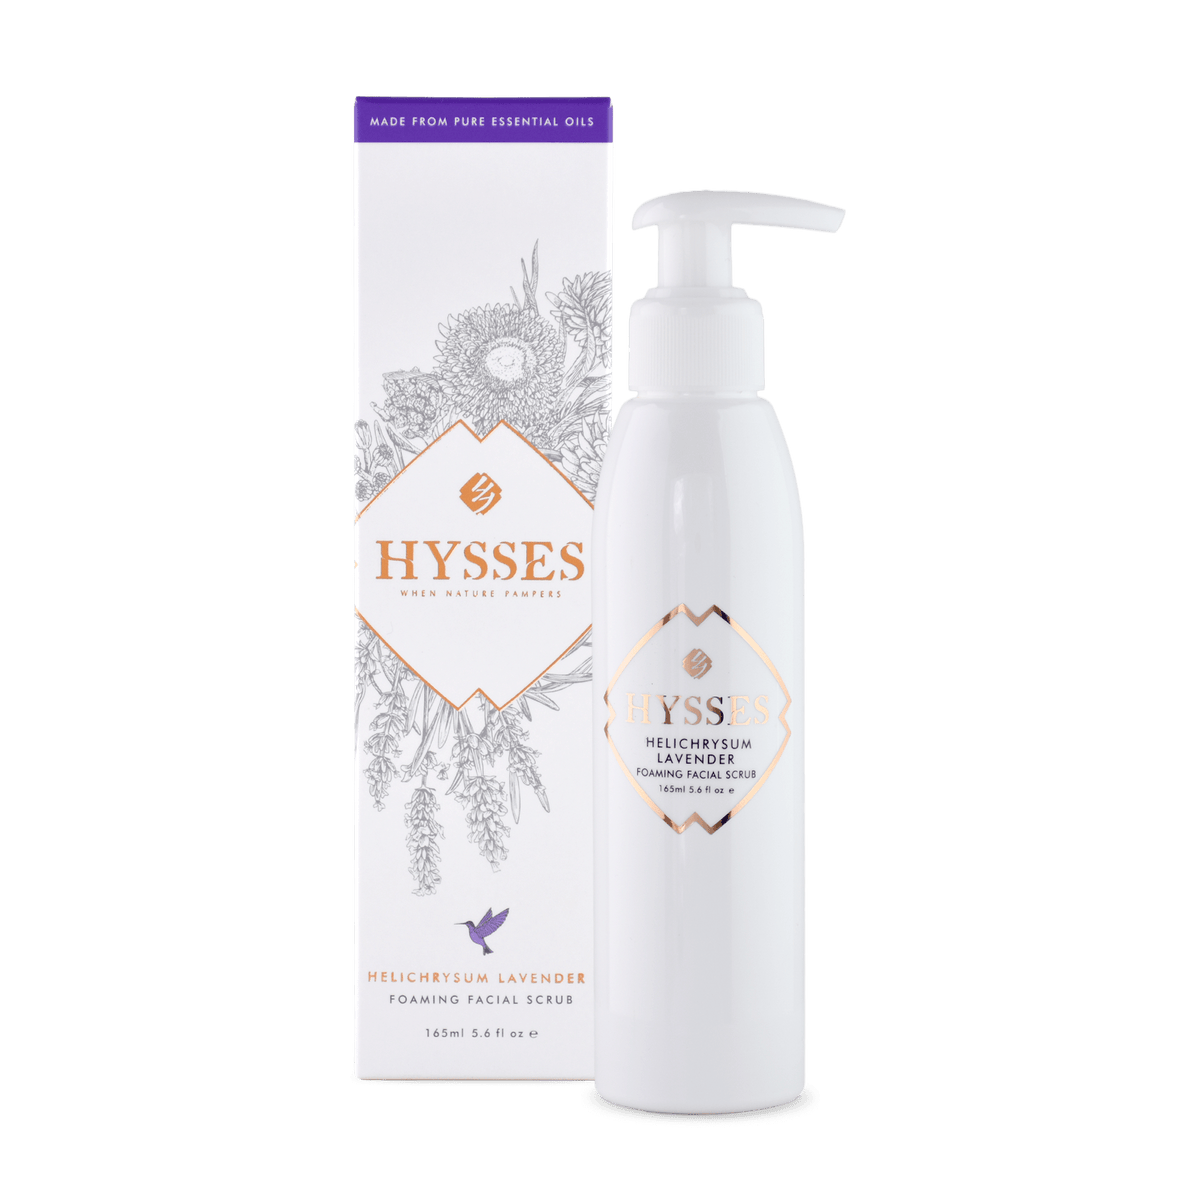 Hysses Face Care Facial Scrub Foaming Helichrysum Lavender